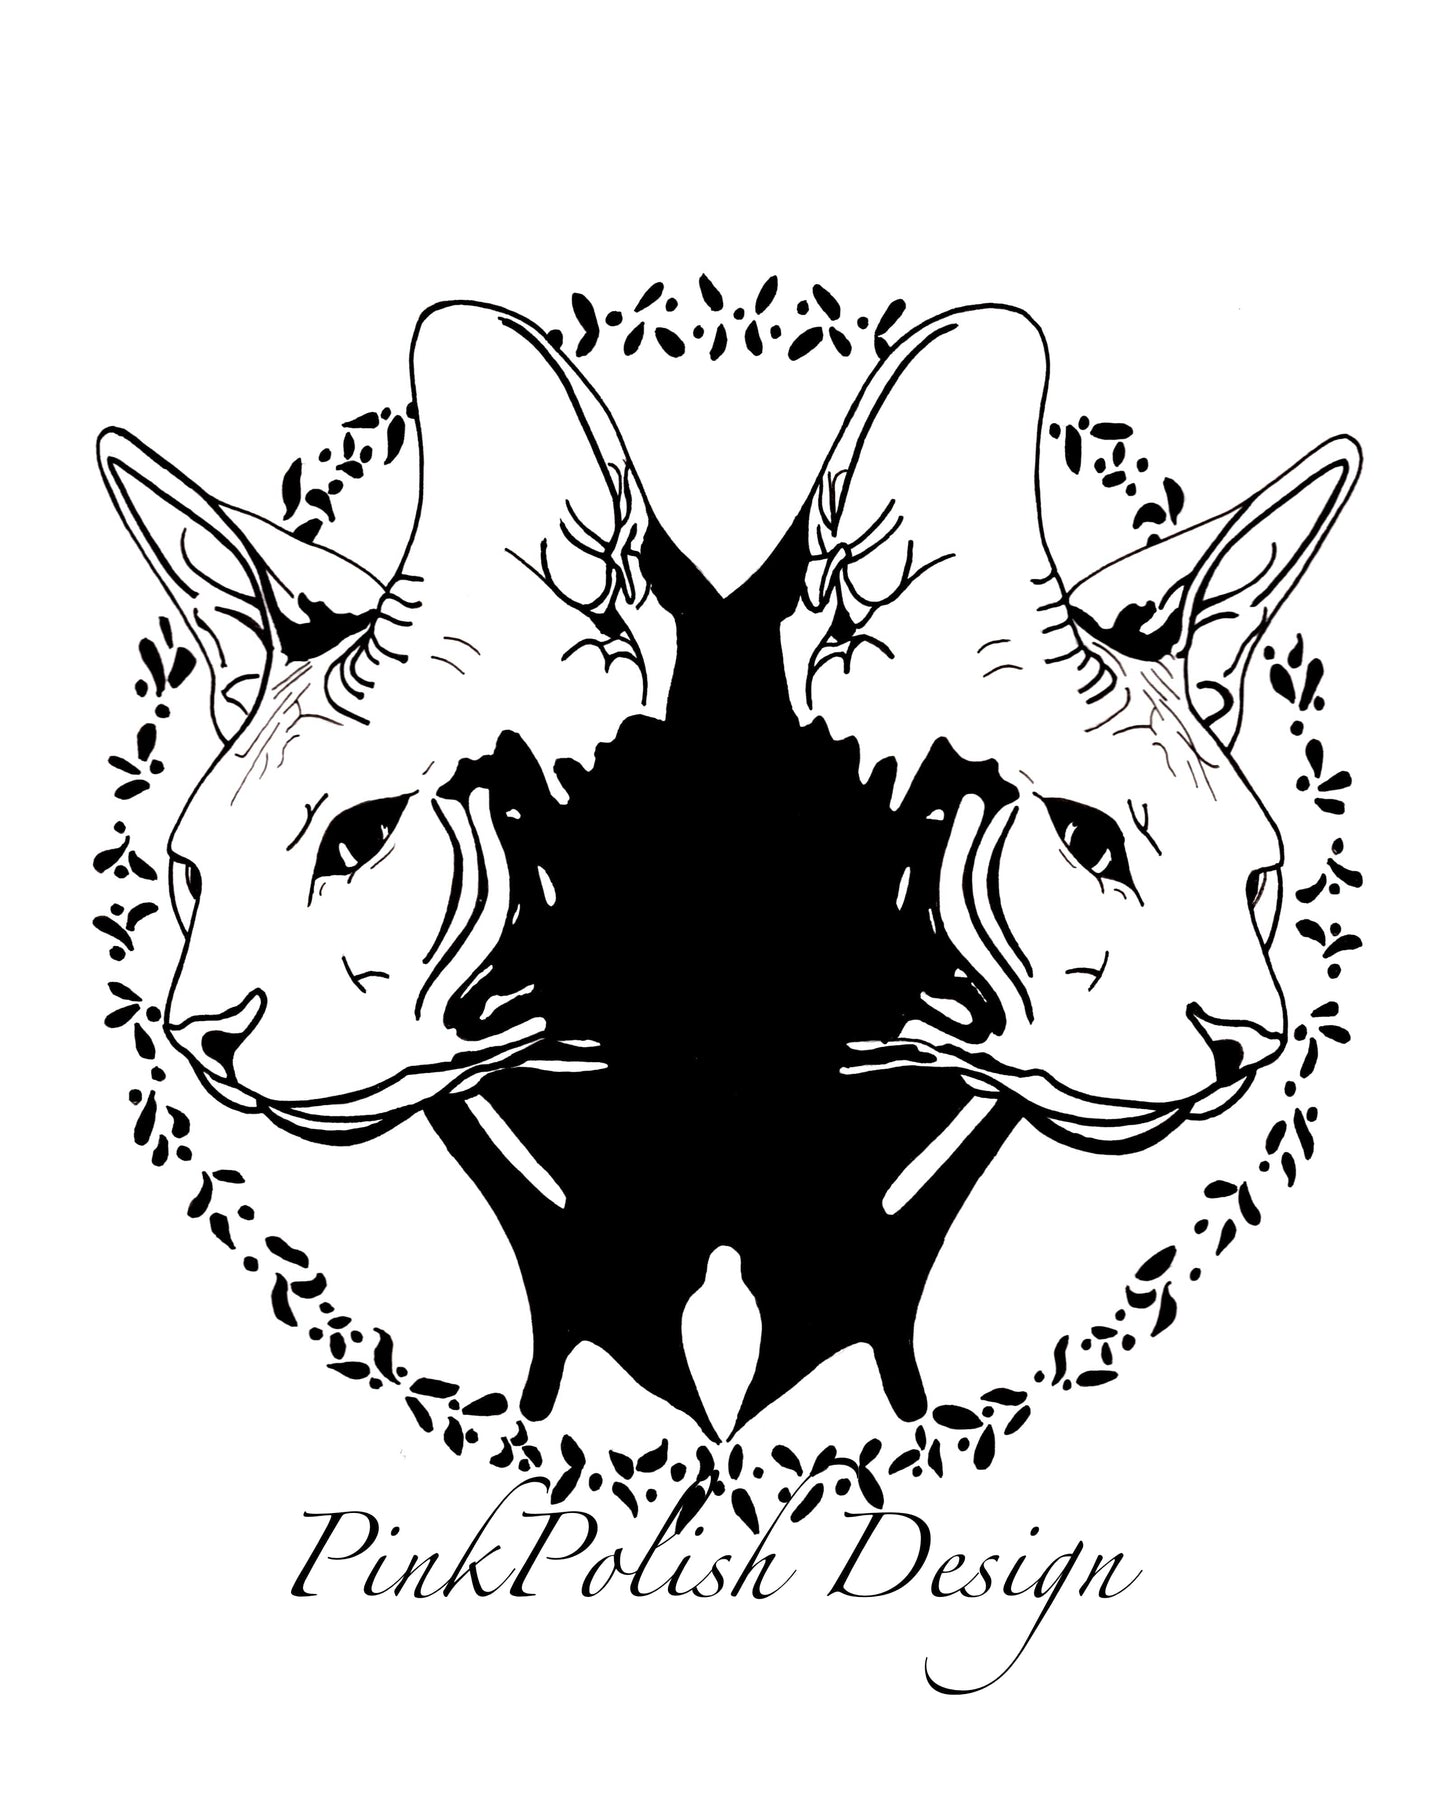 PinkPolish Design Art Prints "Rorschach Cats"  Ink Drawing: Art Print